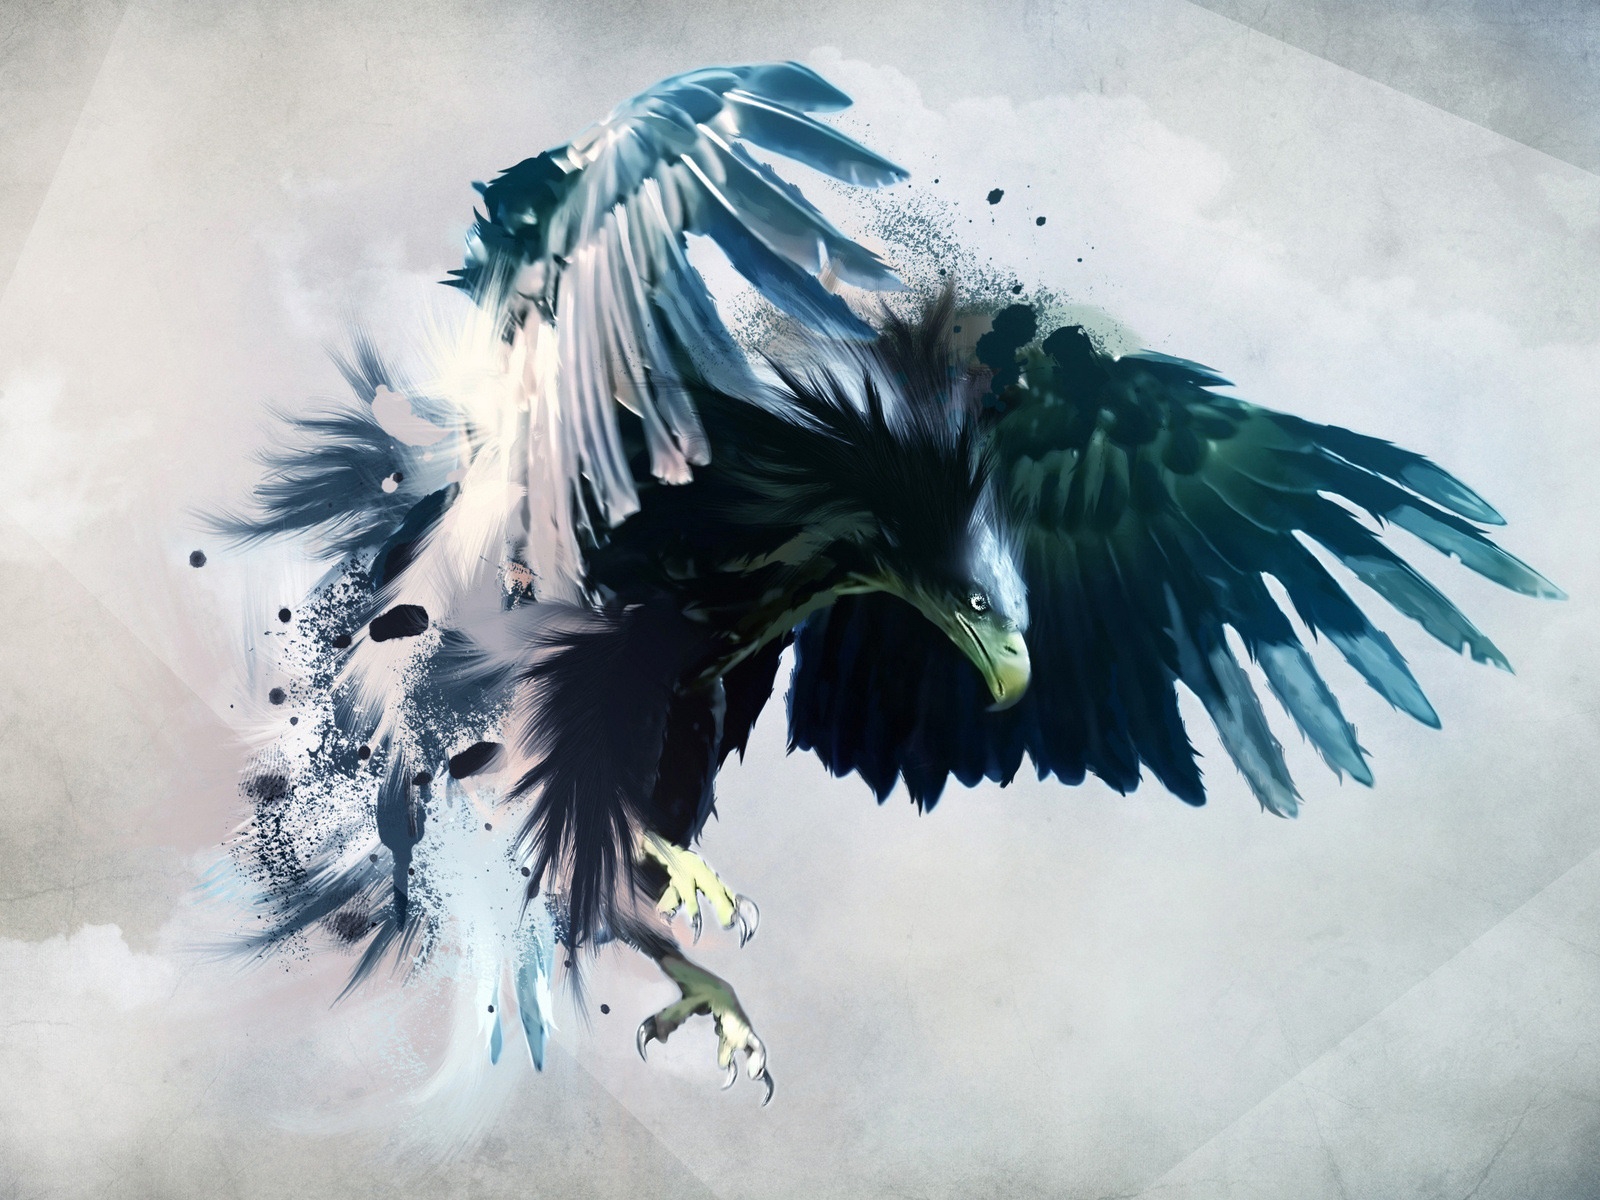 Digital Eagle for 1600 x 1200 resolution